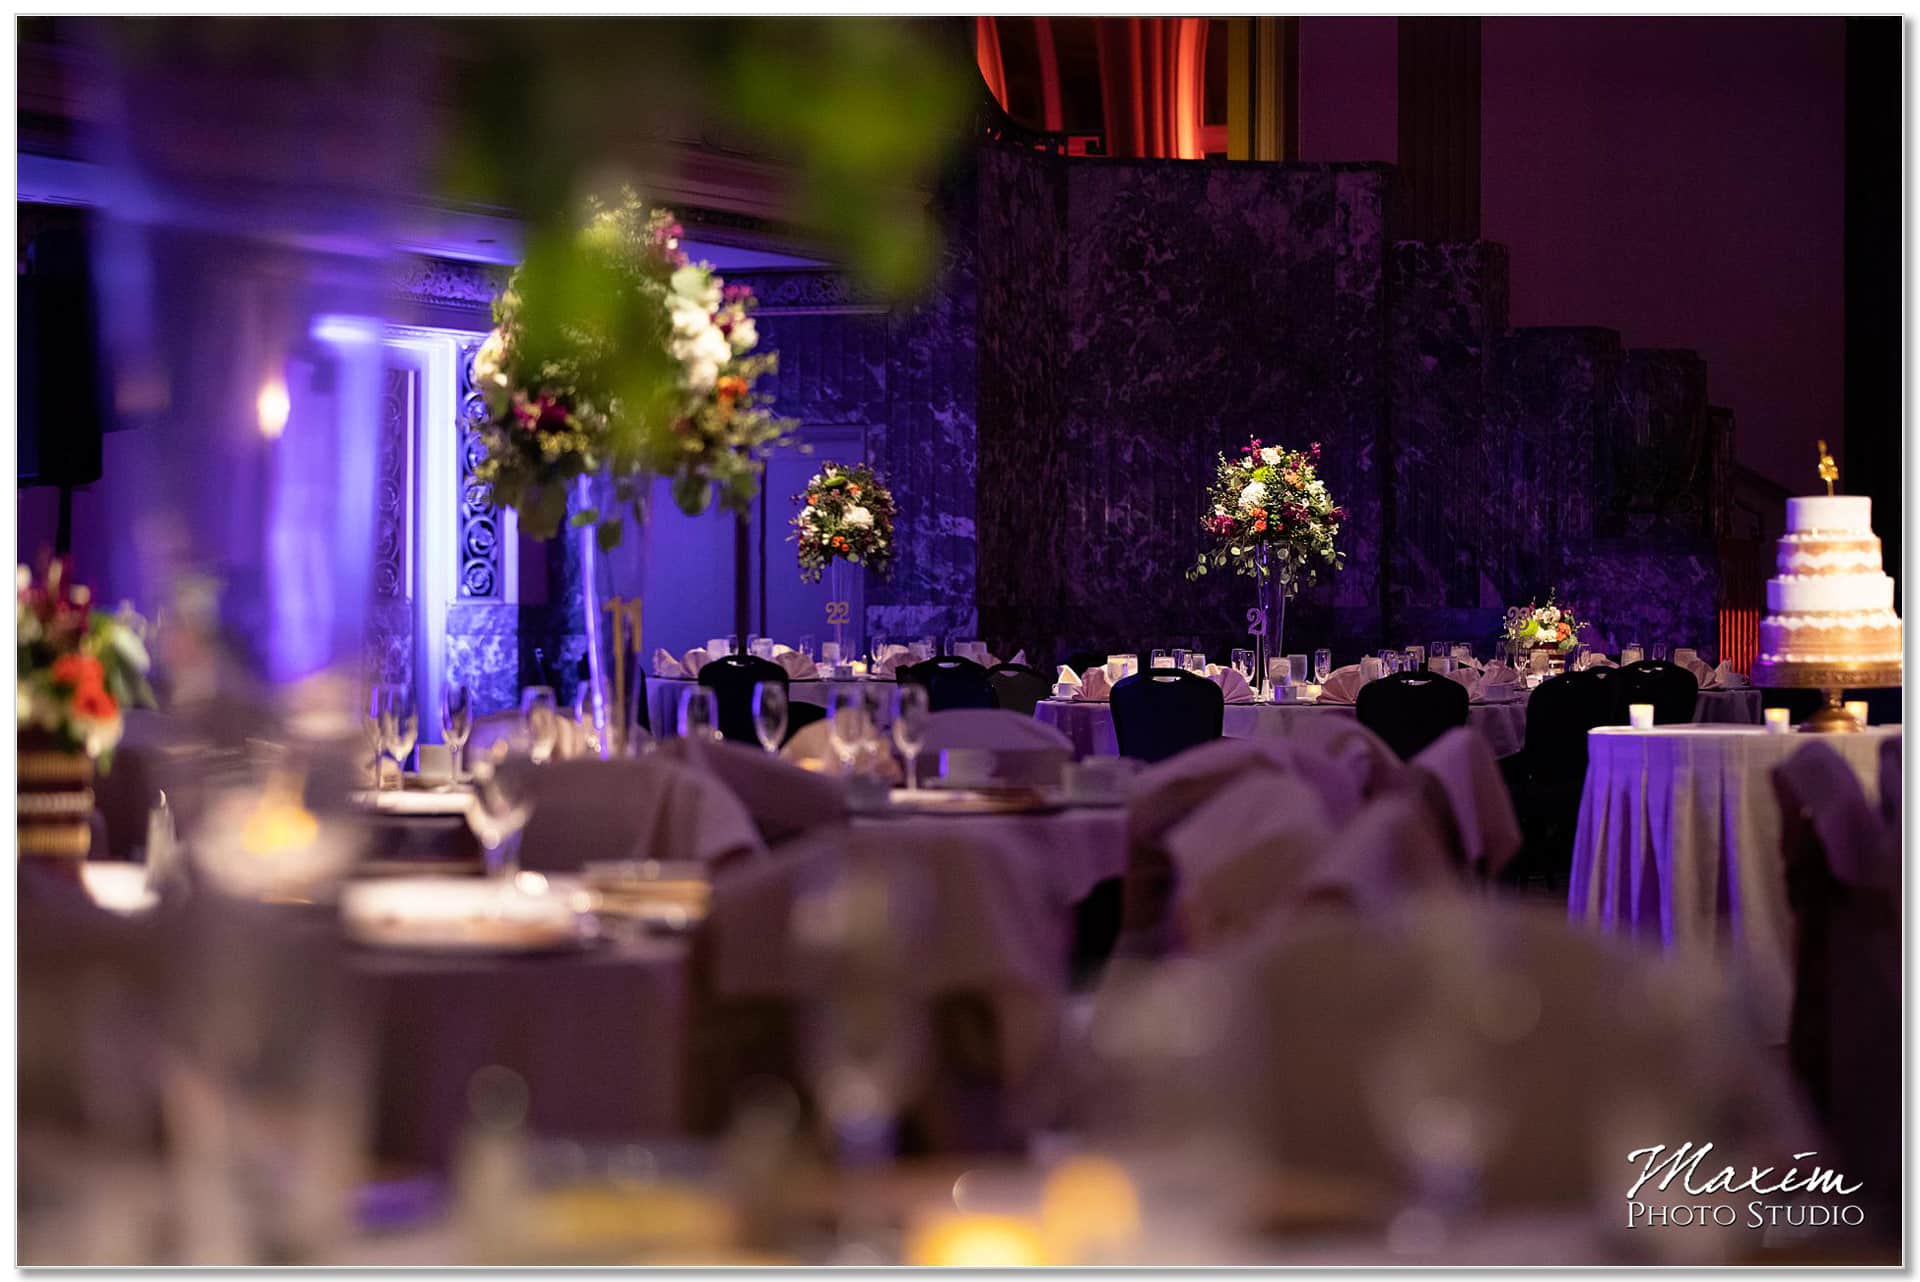 Hilton Netherland Plaza Cincinnati Wedding Reception, Hall of Mirrors Reception